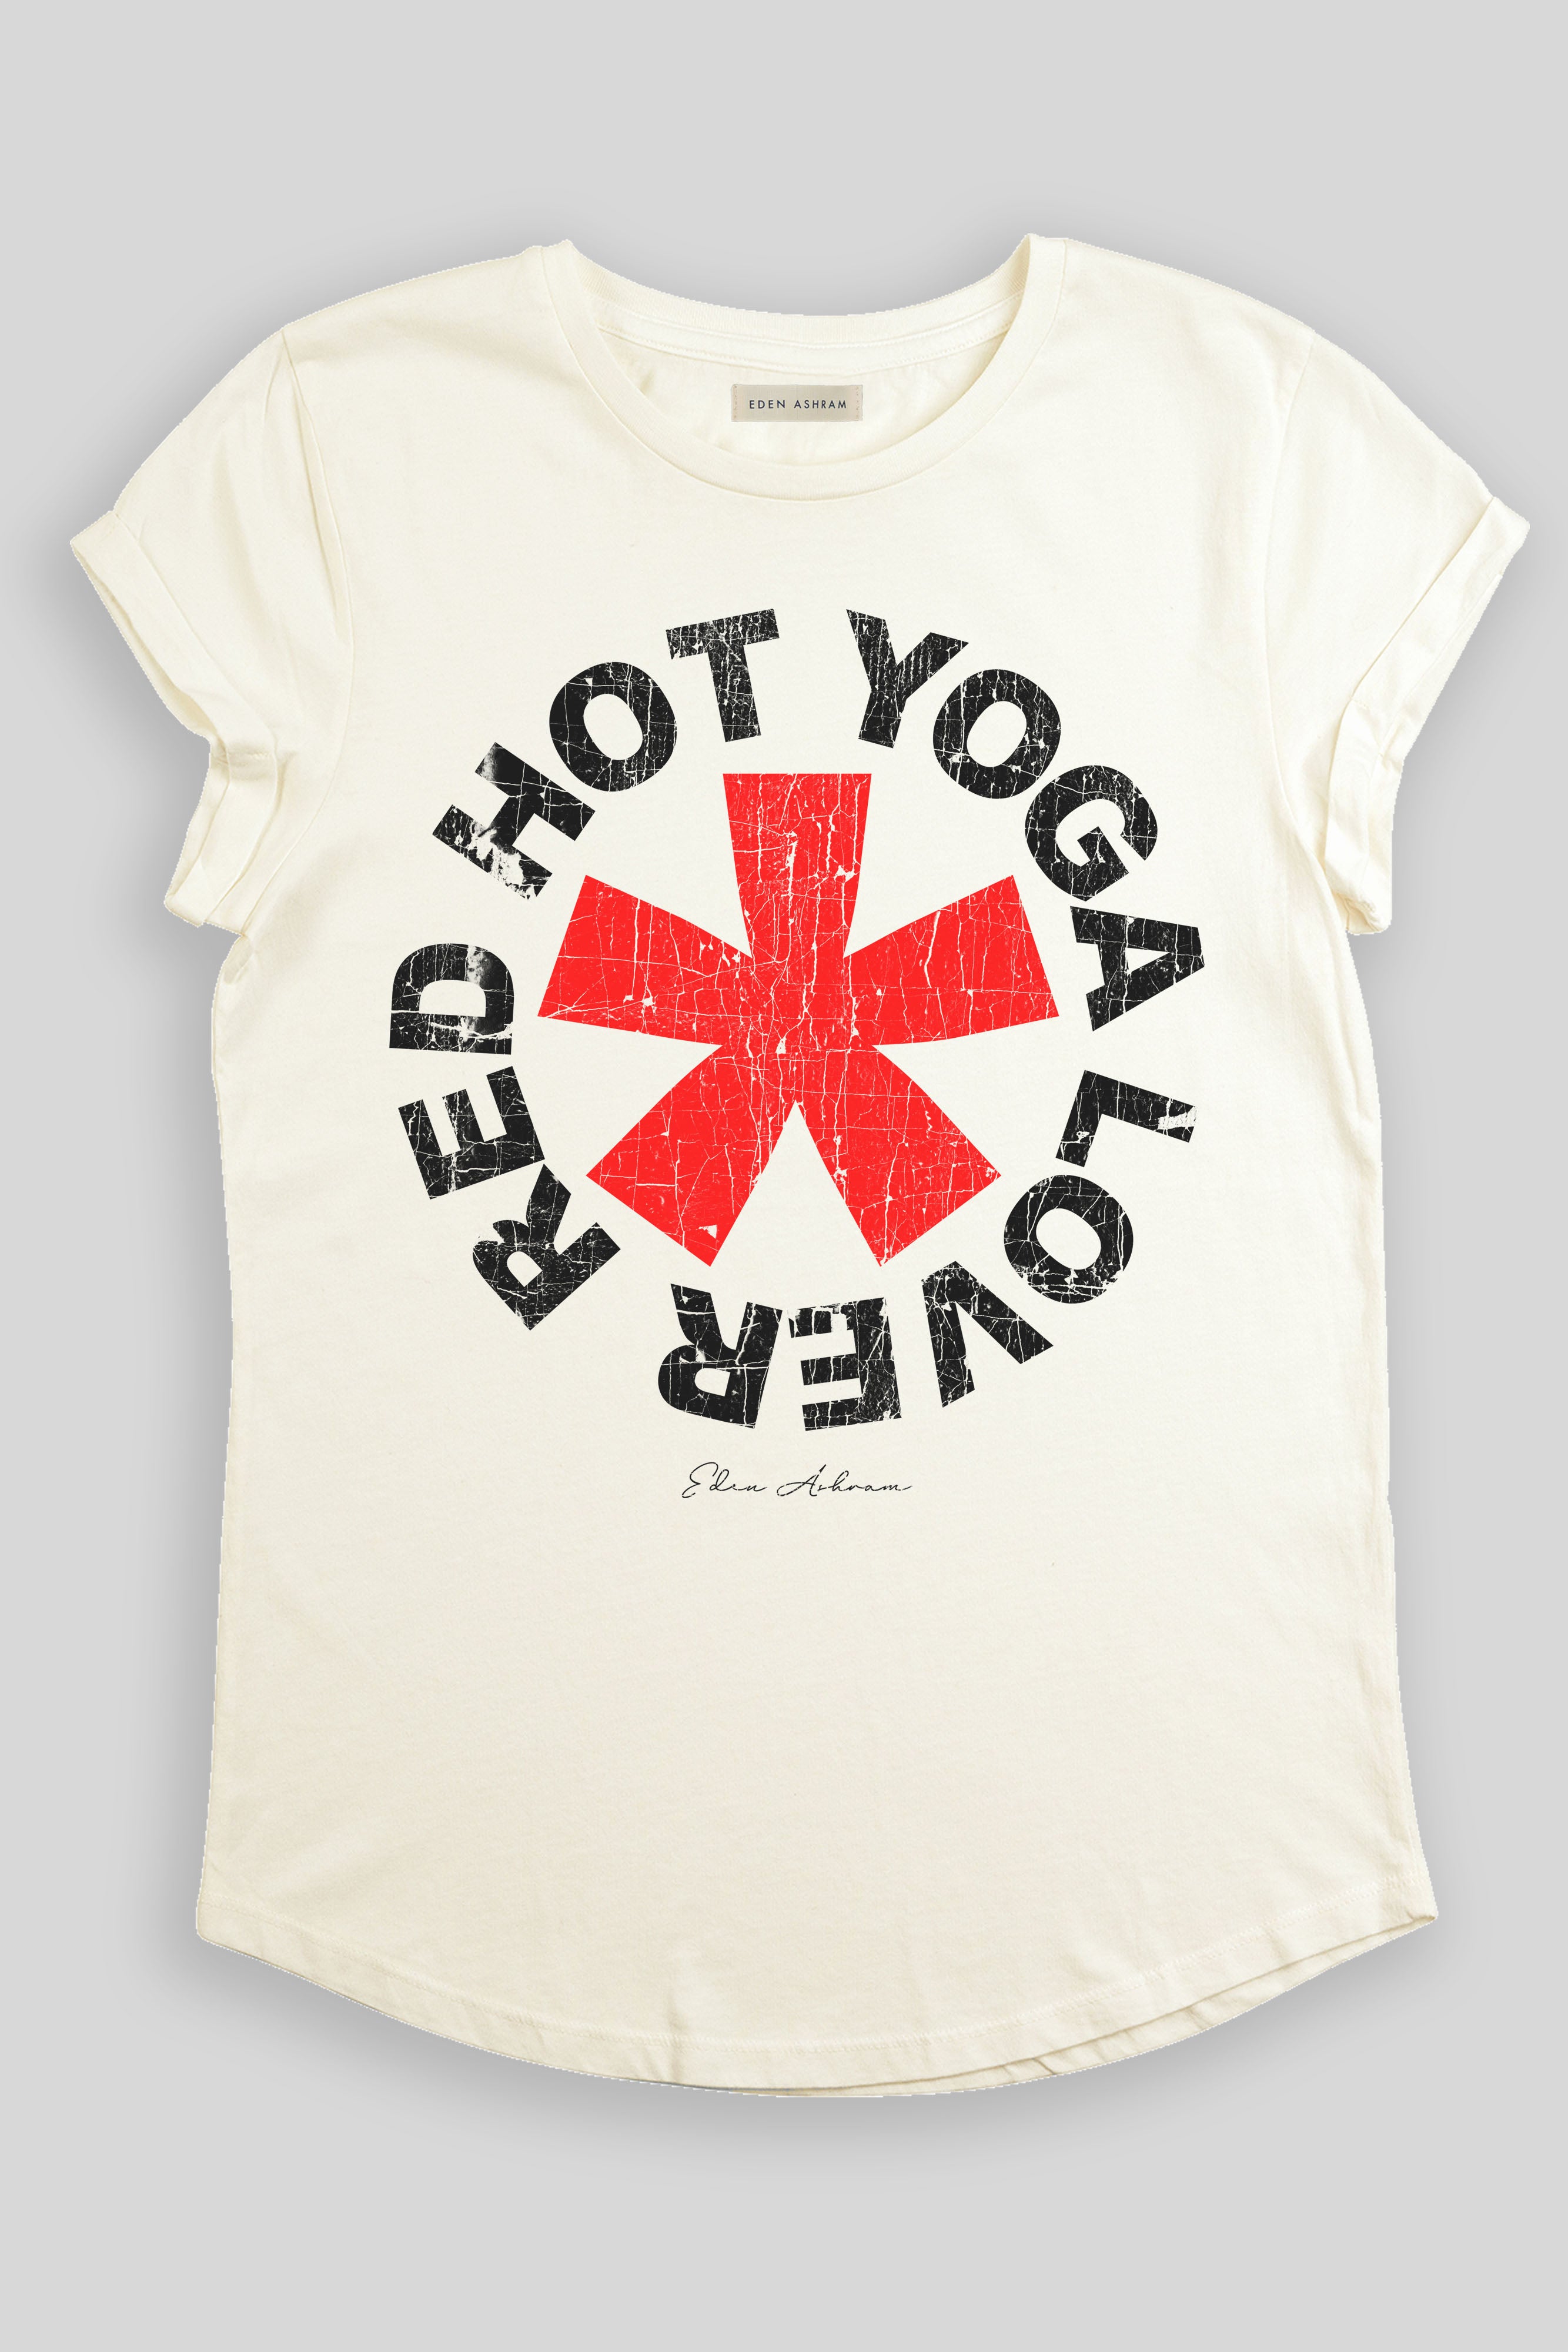 EDEN ASHRAM Red Hot Yoga Lover Premium Rolled Sleeve T-Shirt Stonewash White